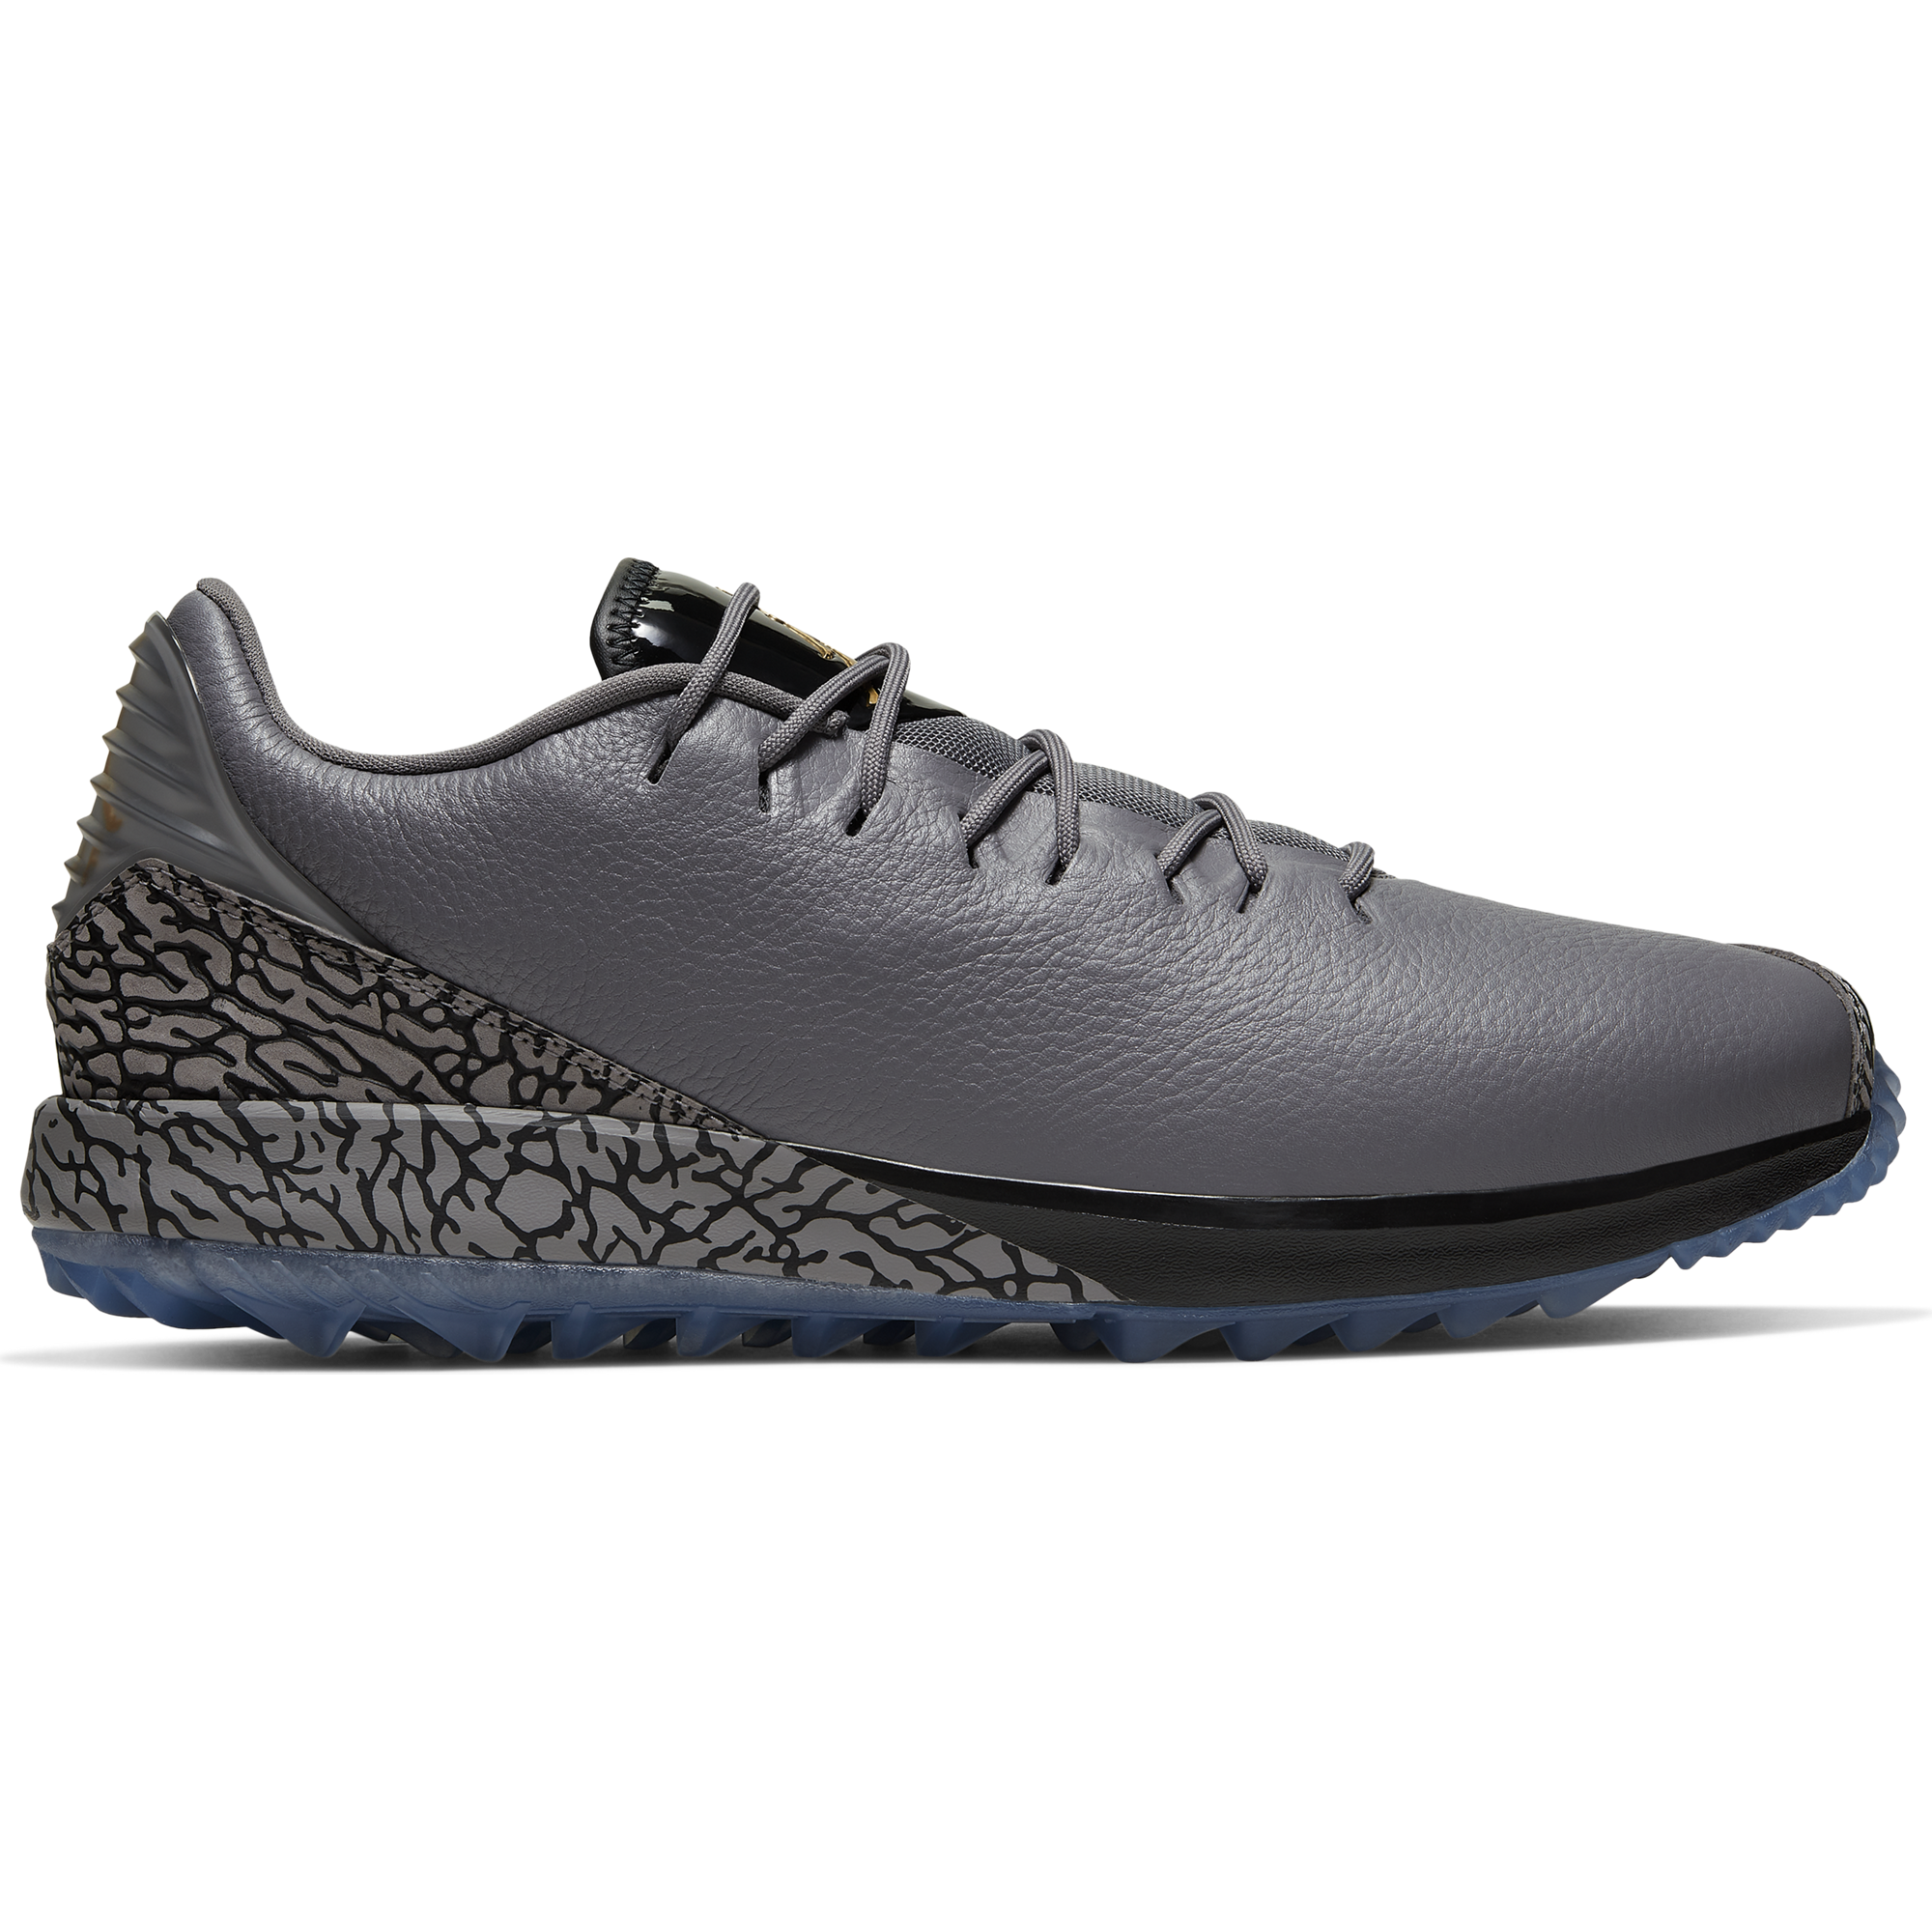 jordan golf shoes grey